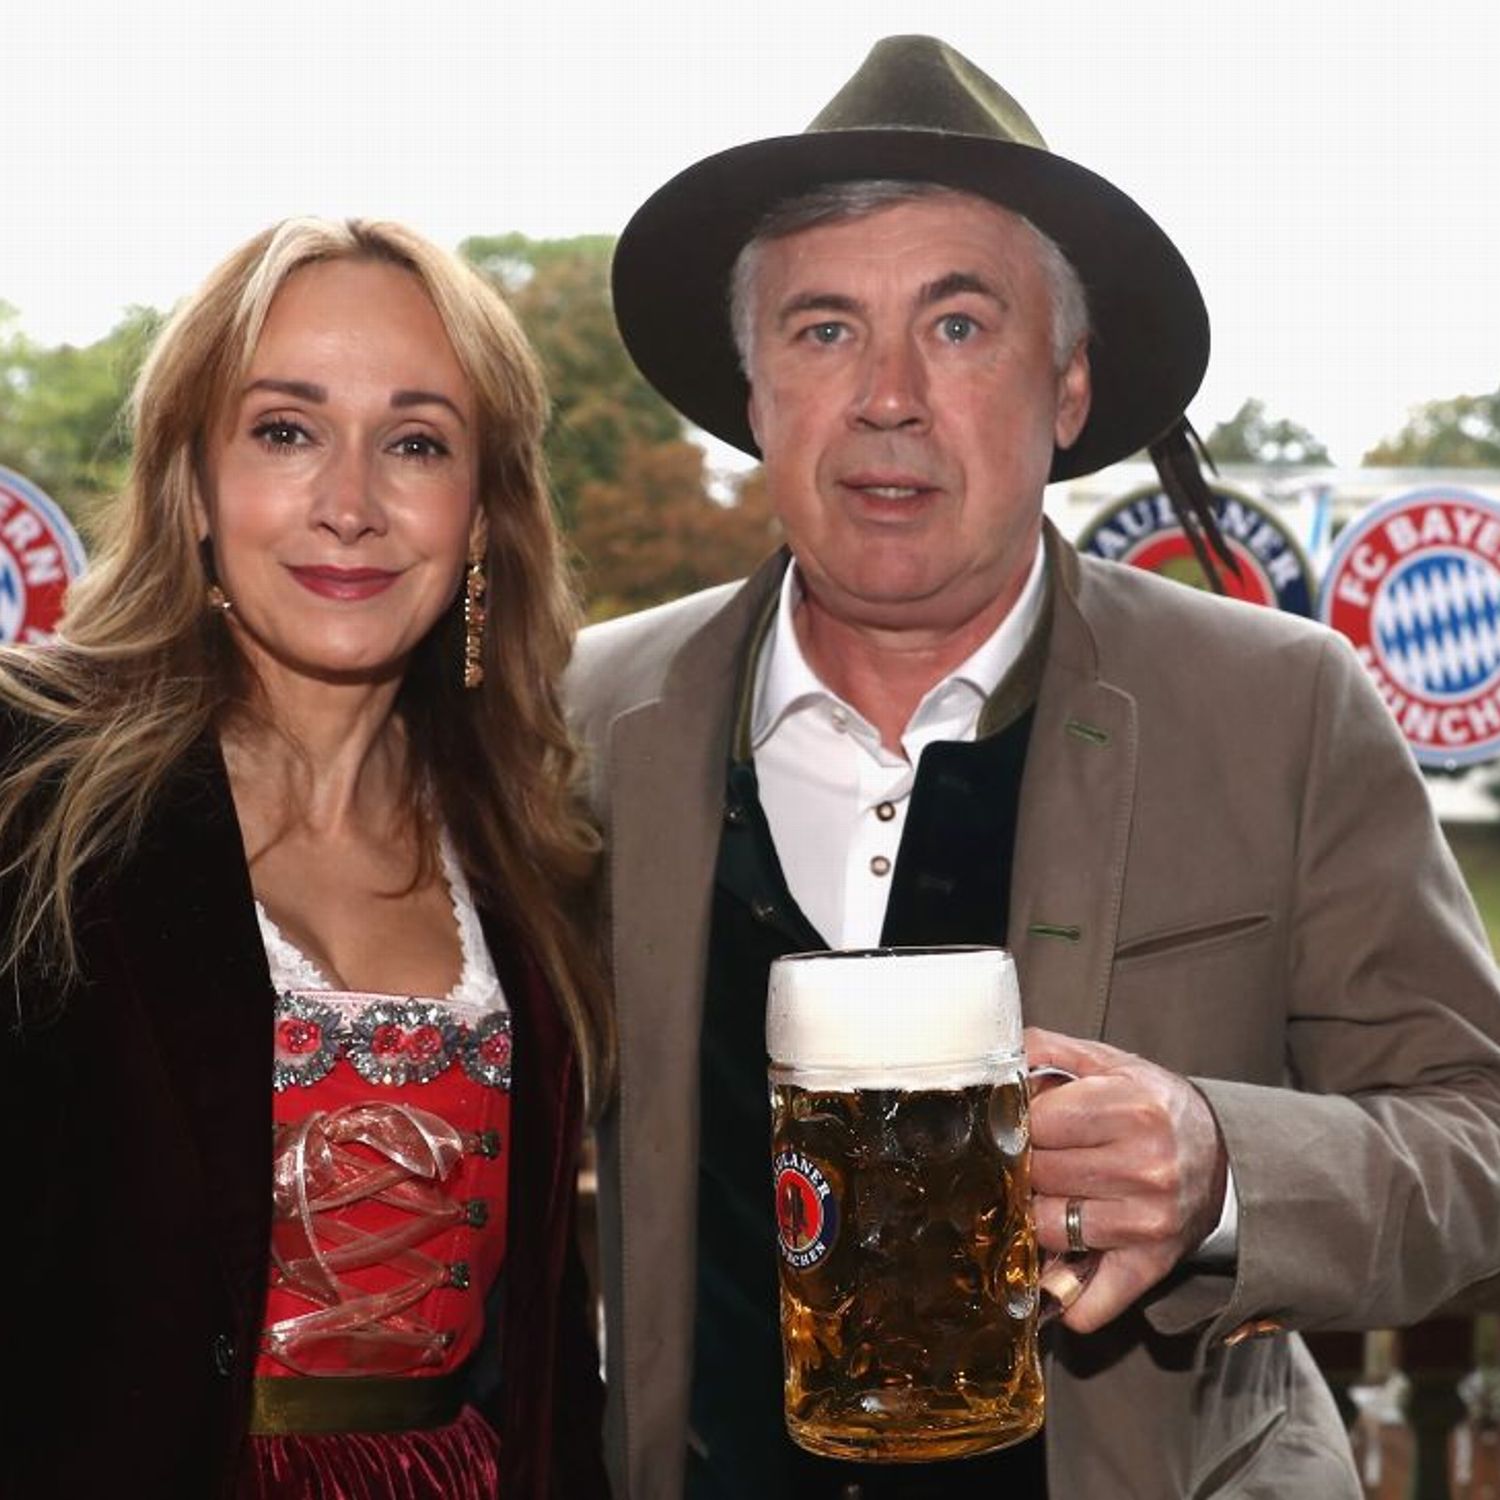 Bayern Munich make a visit to Oktoberfest - ESPN FC (blog)